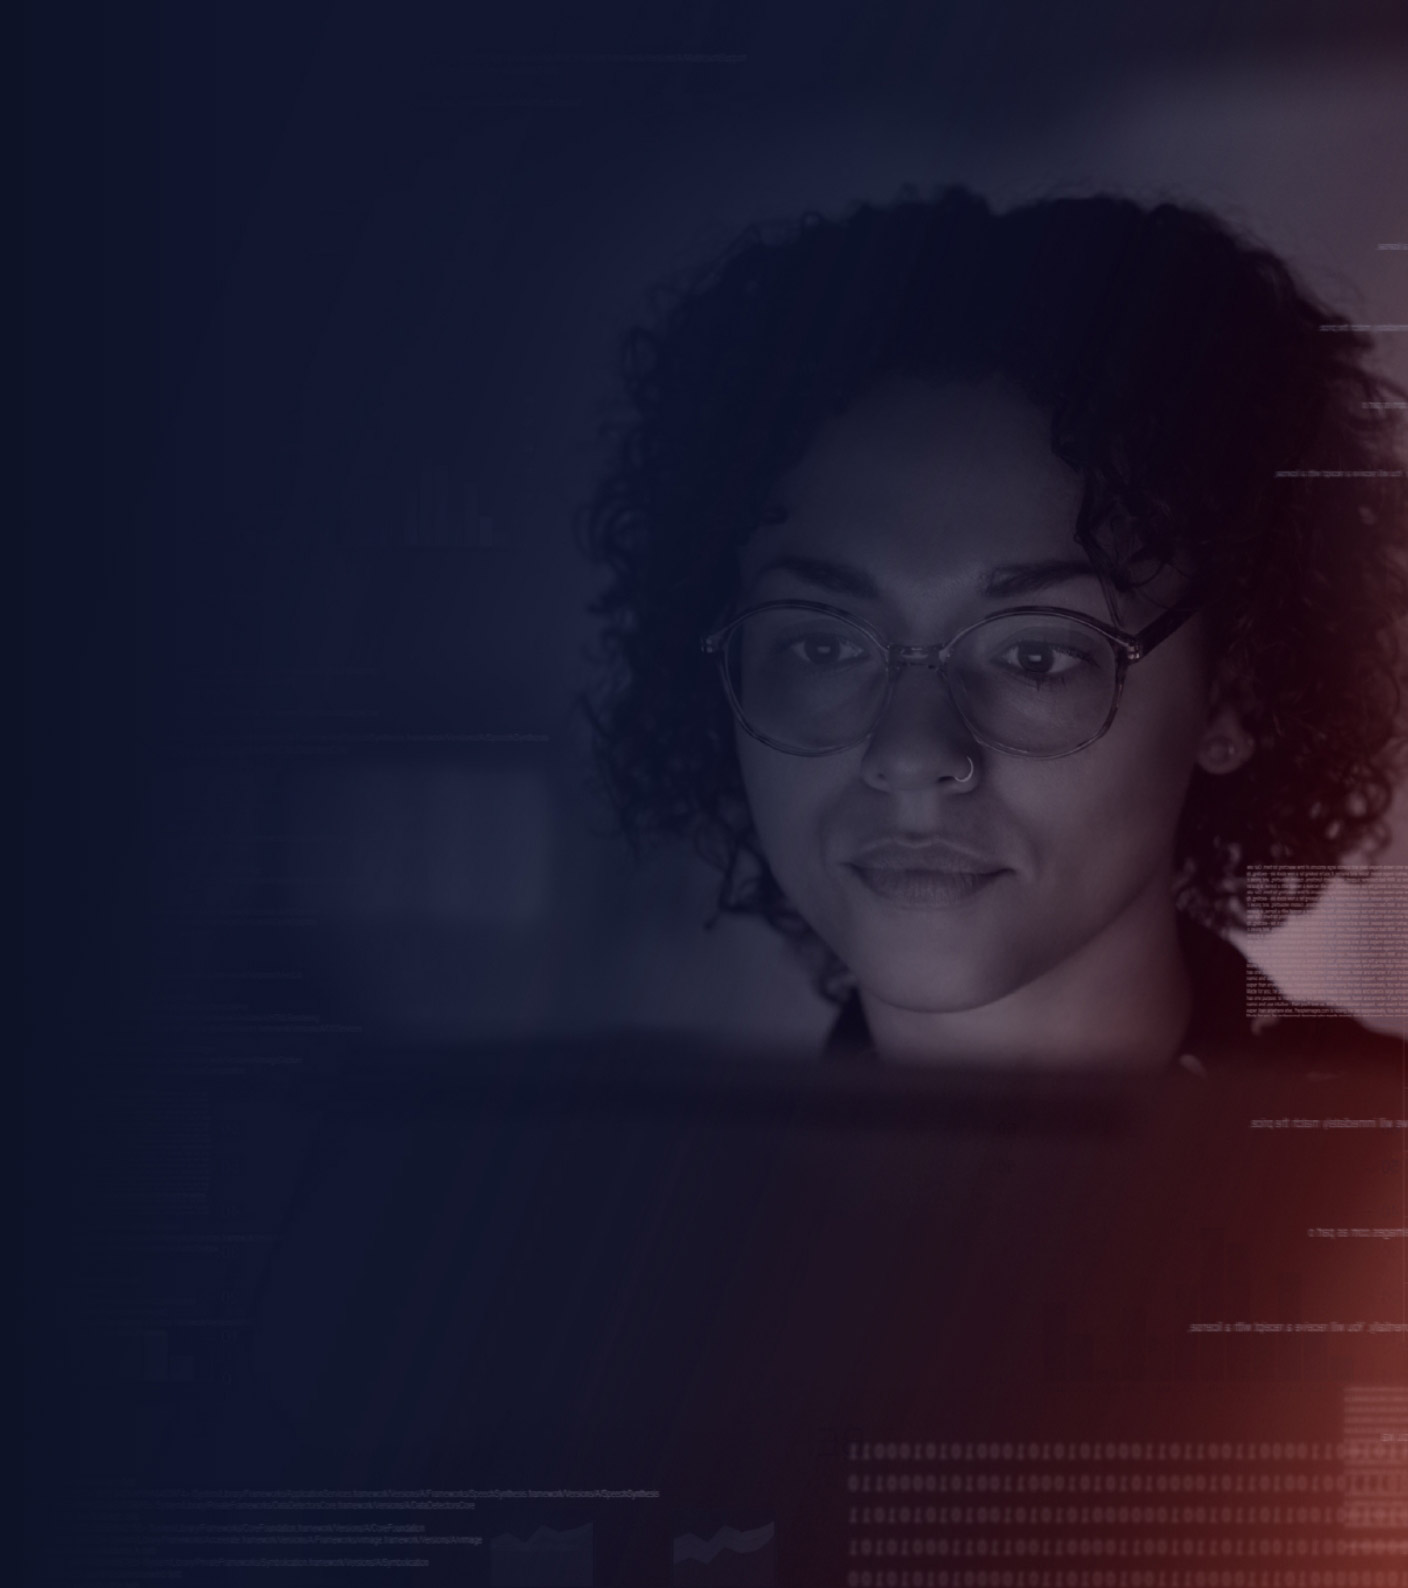 Woman wearing glasses looking at computer monitor